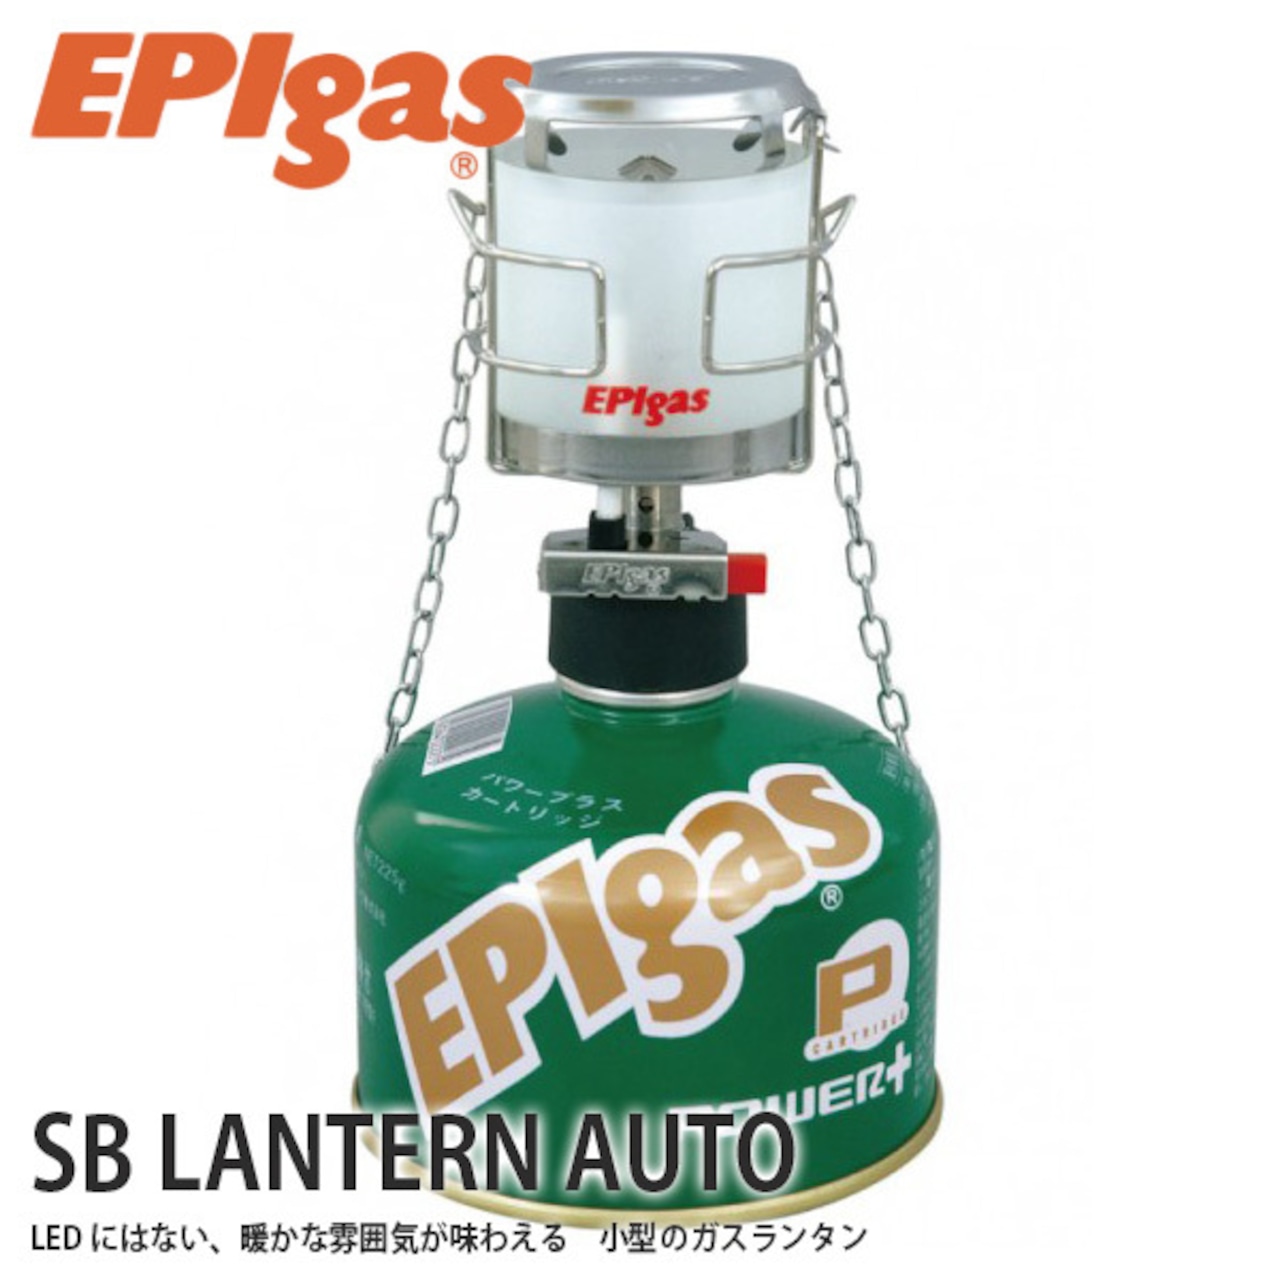 EPIgas(イーピーアイ ガス) SB LANTERN AUTO 小型 ガス ランタン 携帯